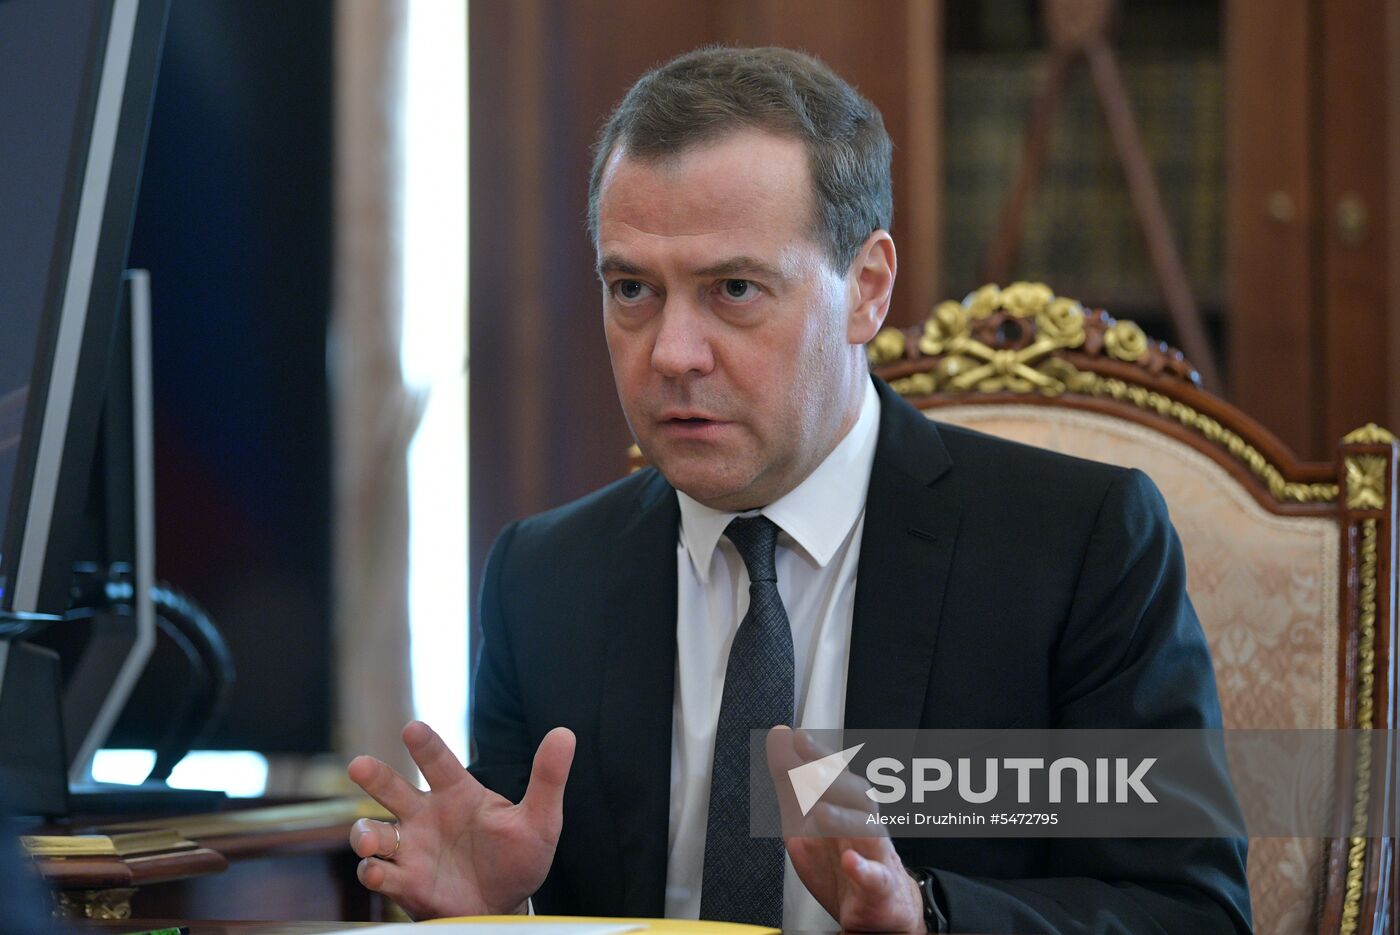 Russian President Vladimir Putin meets with Russian Prime Minister Dmitry Medvedev